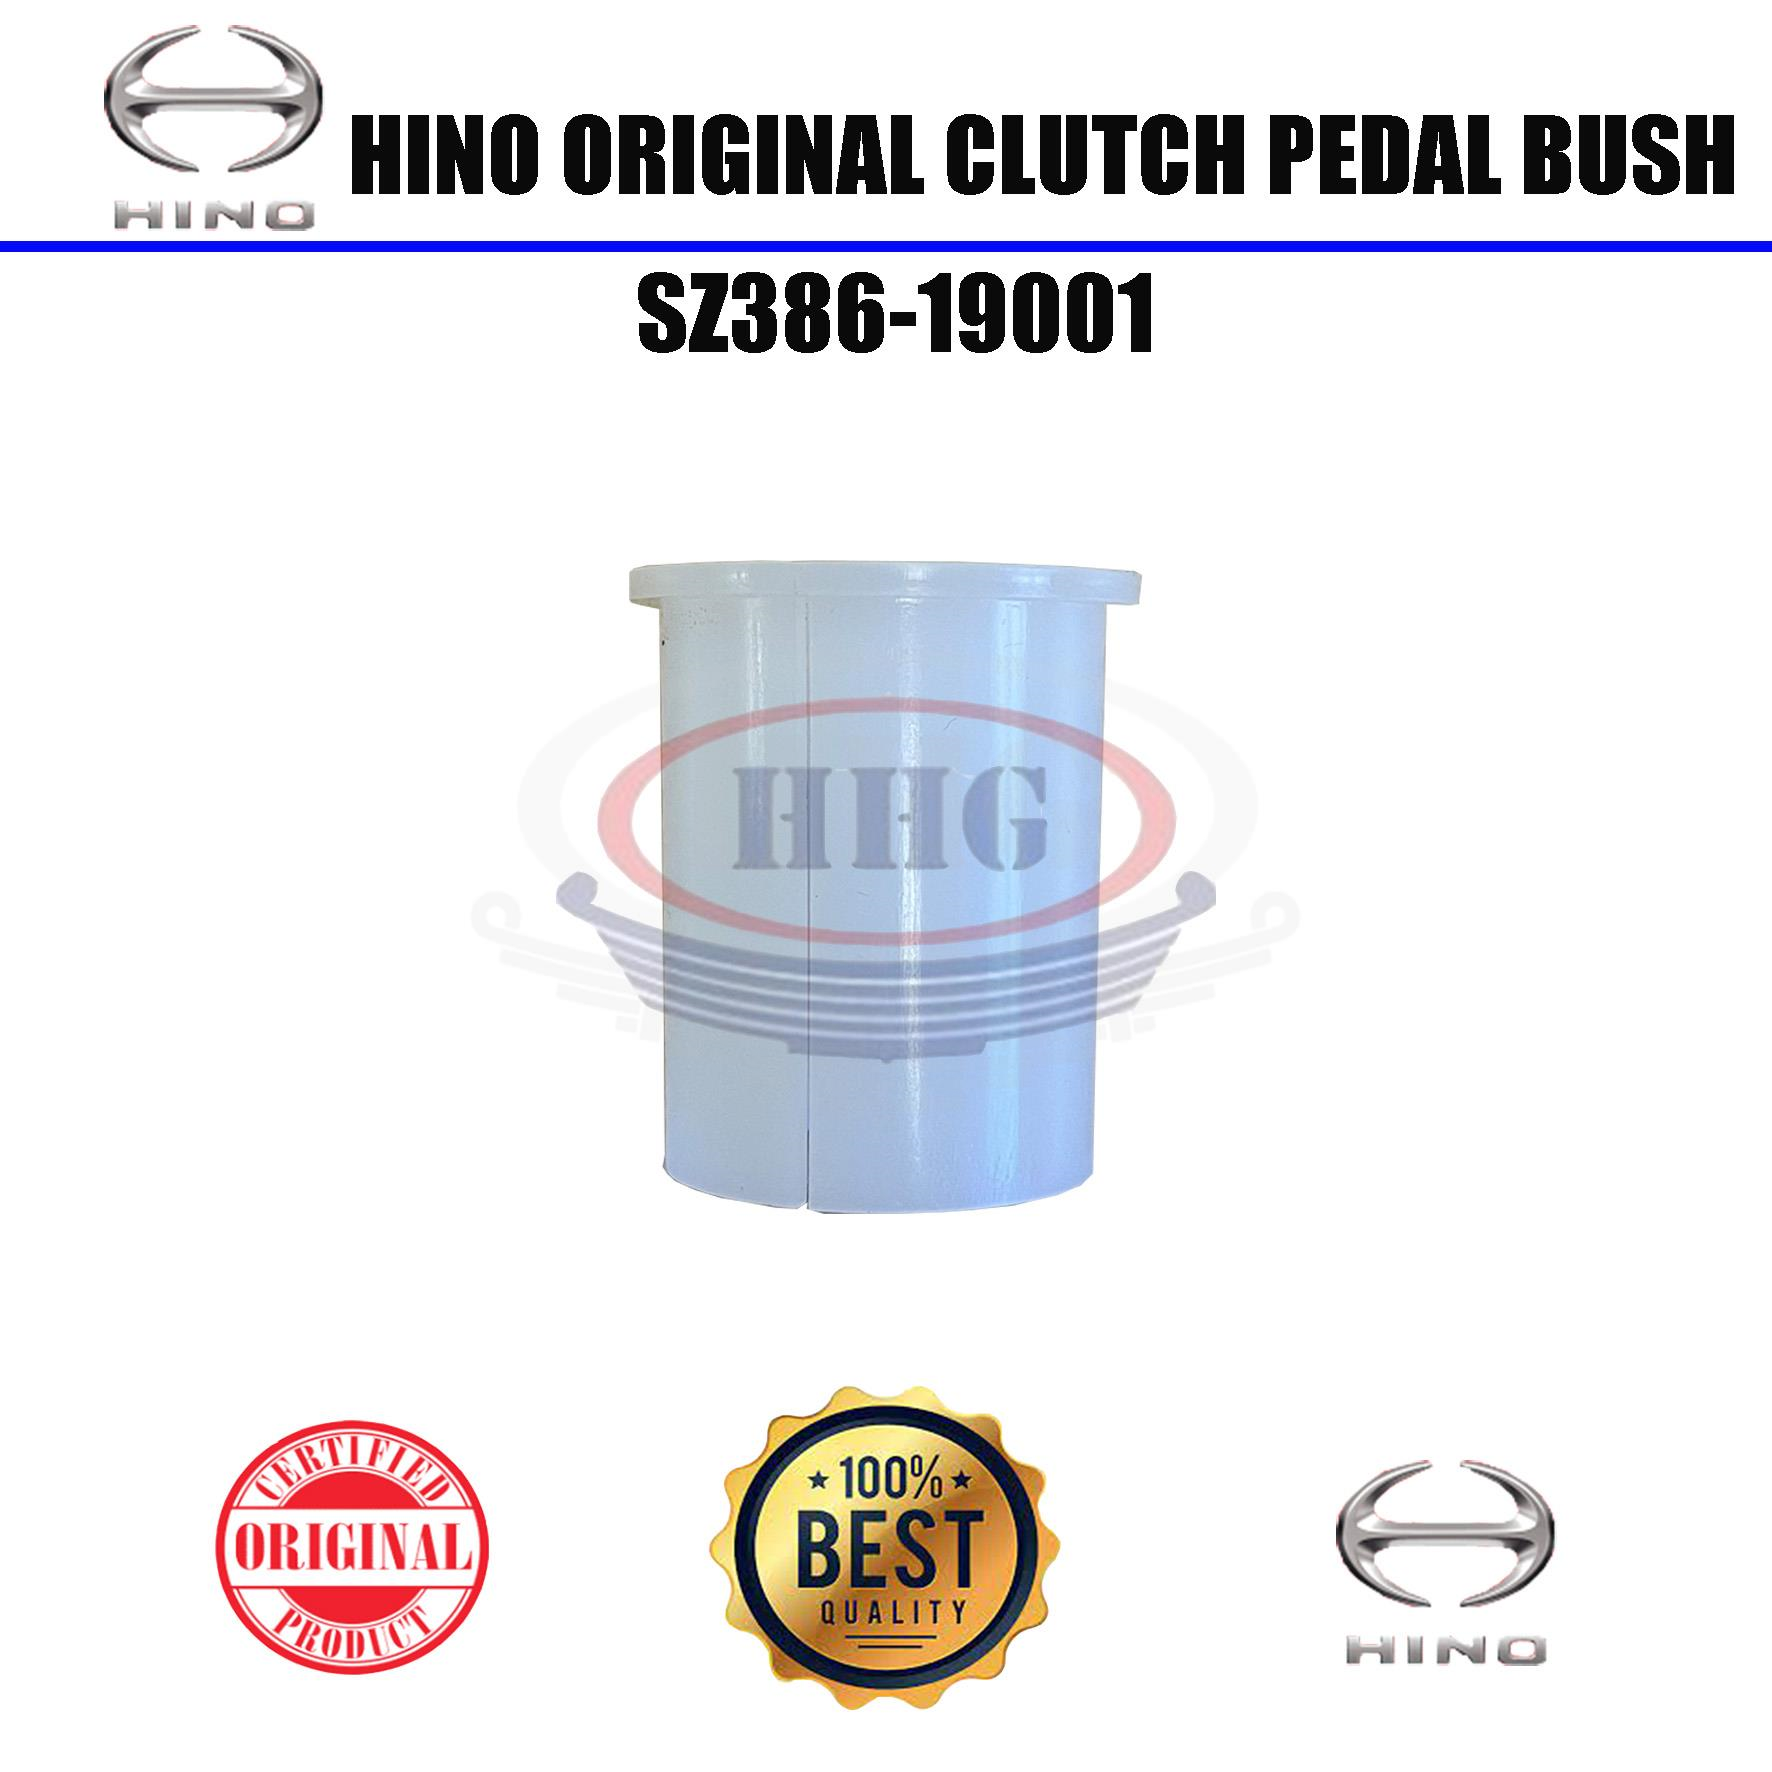 Hino Original GH1J Clutch Pedal Bush (SZ386-19001)